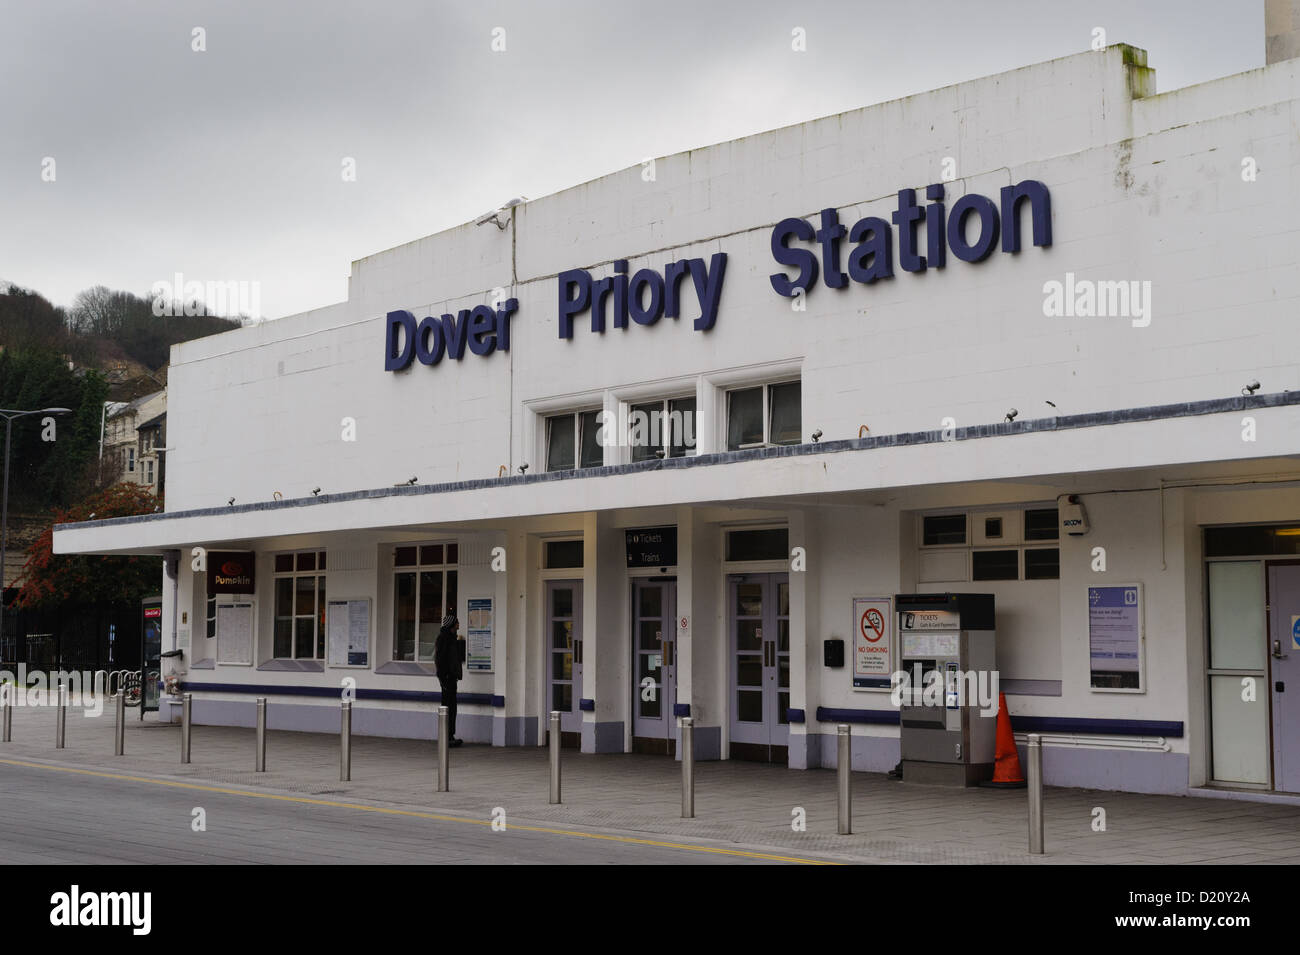 Dover Priory Station Stock Photo